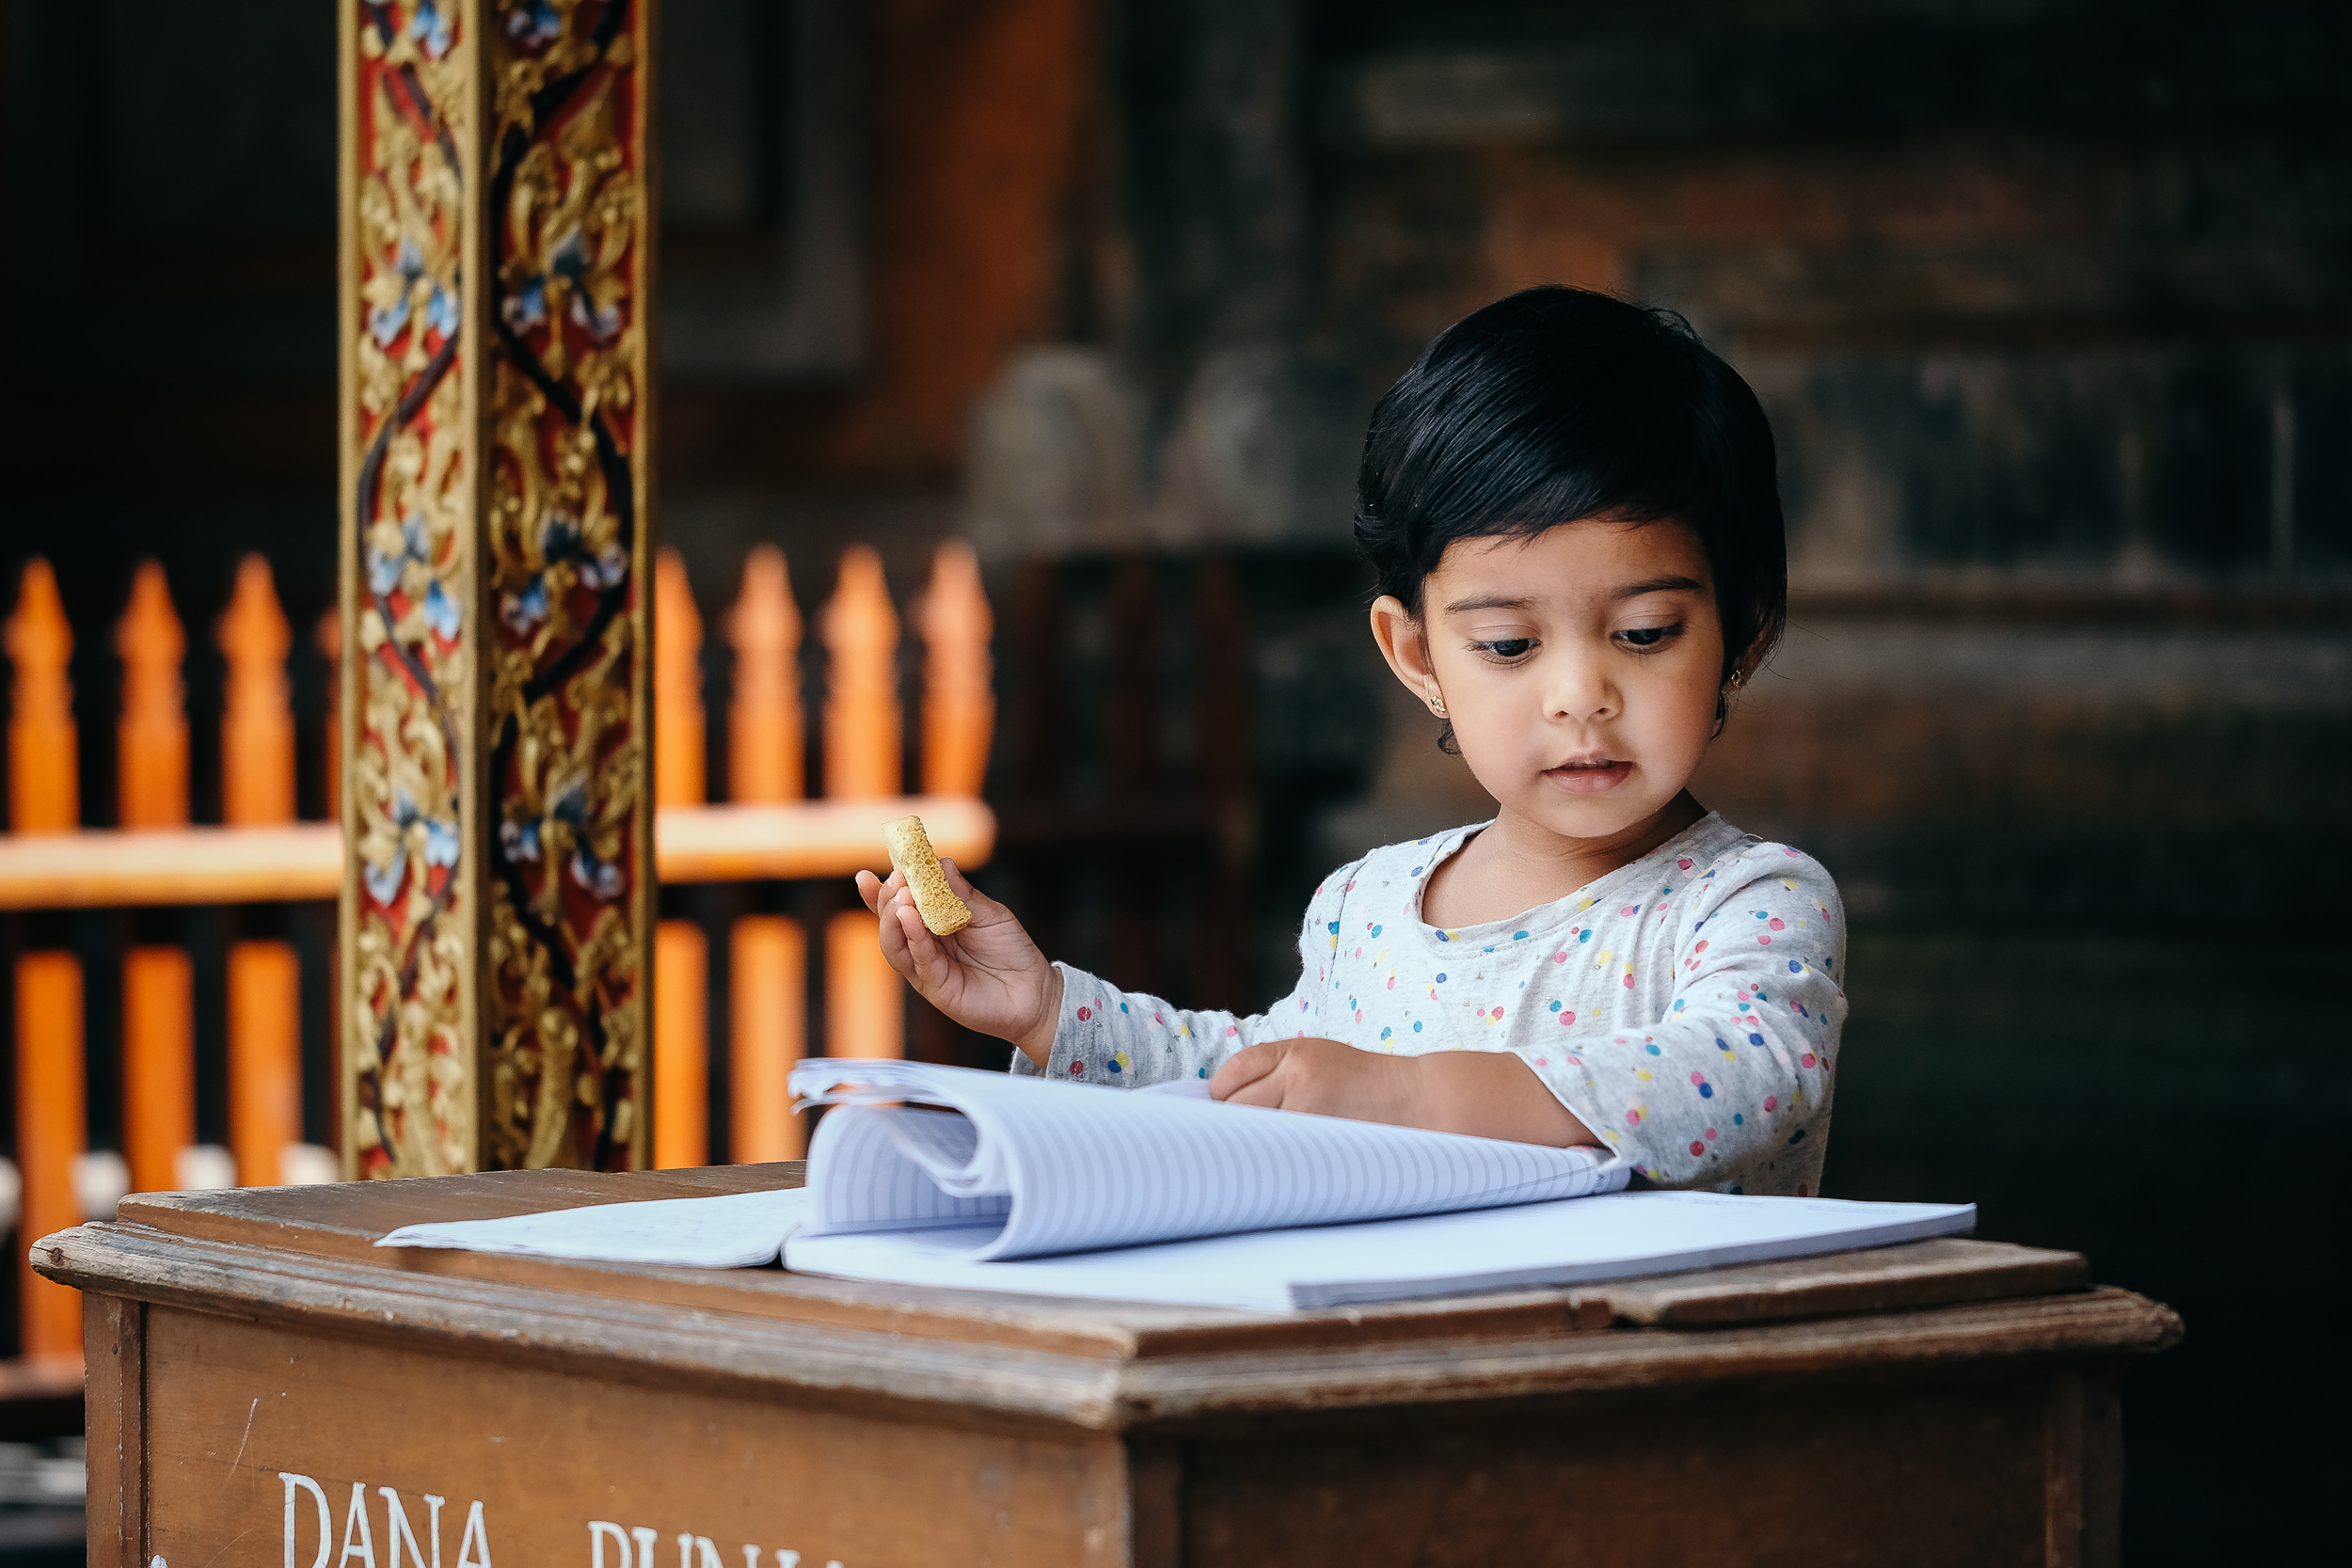  Child reading a book in Tirta Empul Hindu temple in Bali - Indonesia  Fujifilm X-E3 + Fujinon XF 80mm f/2.8 R LM WR OIS Macro  1/640sec, f/2.8, ISO 400 